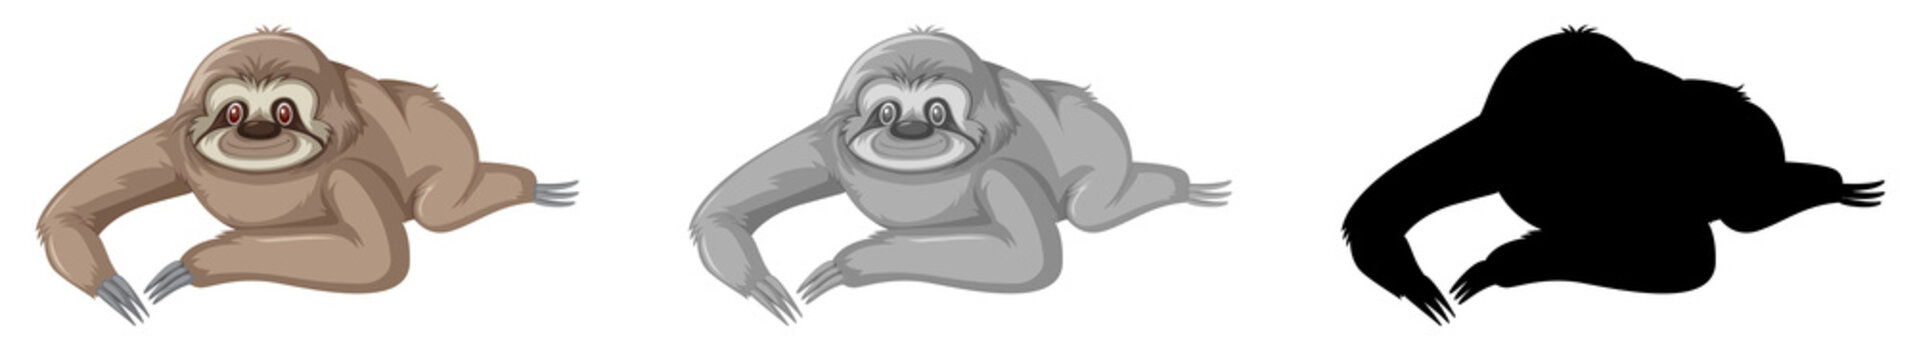 Set of sloth character